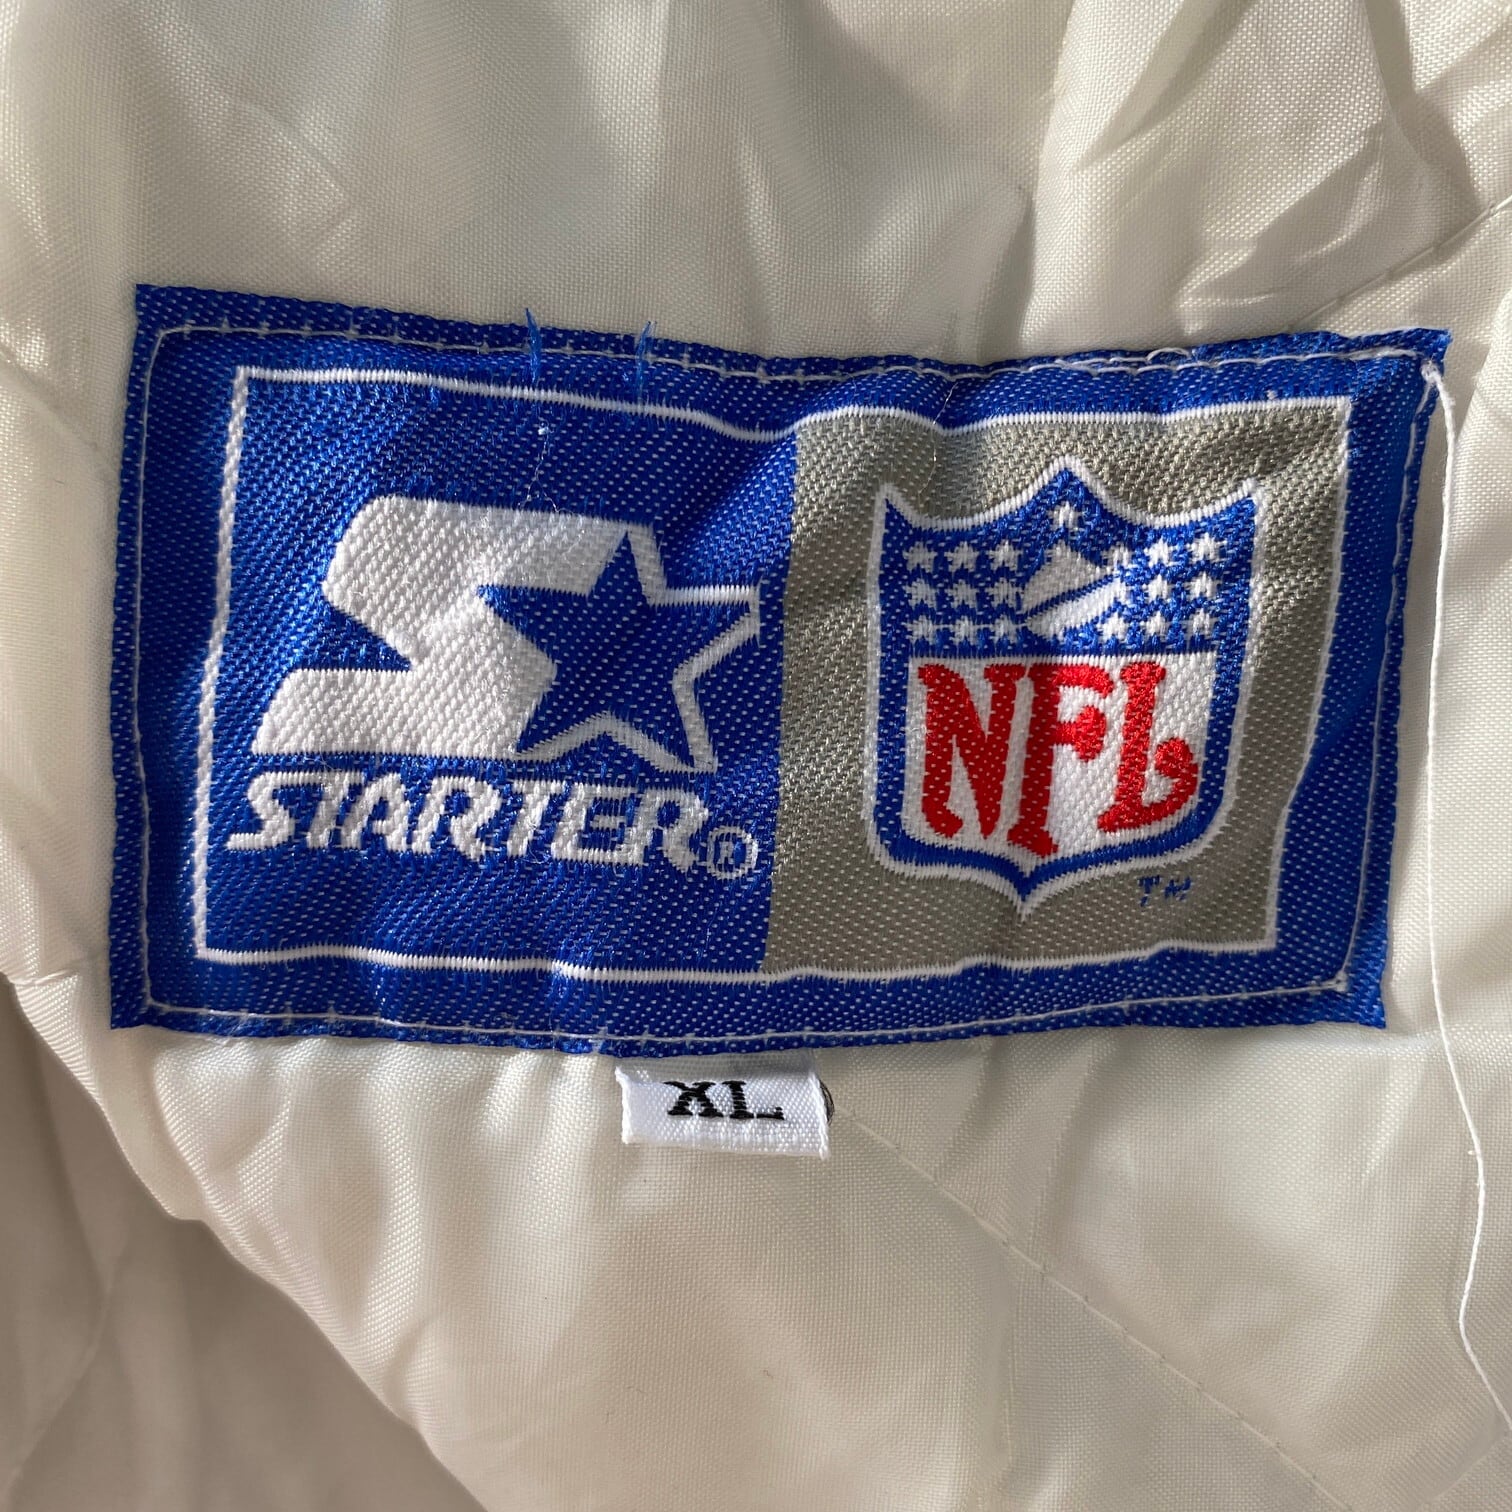 Reebok NFL デトロイト・ライオンズ ロゴ刺繍 ナイロンジャケット